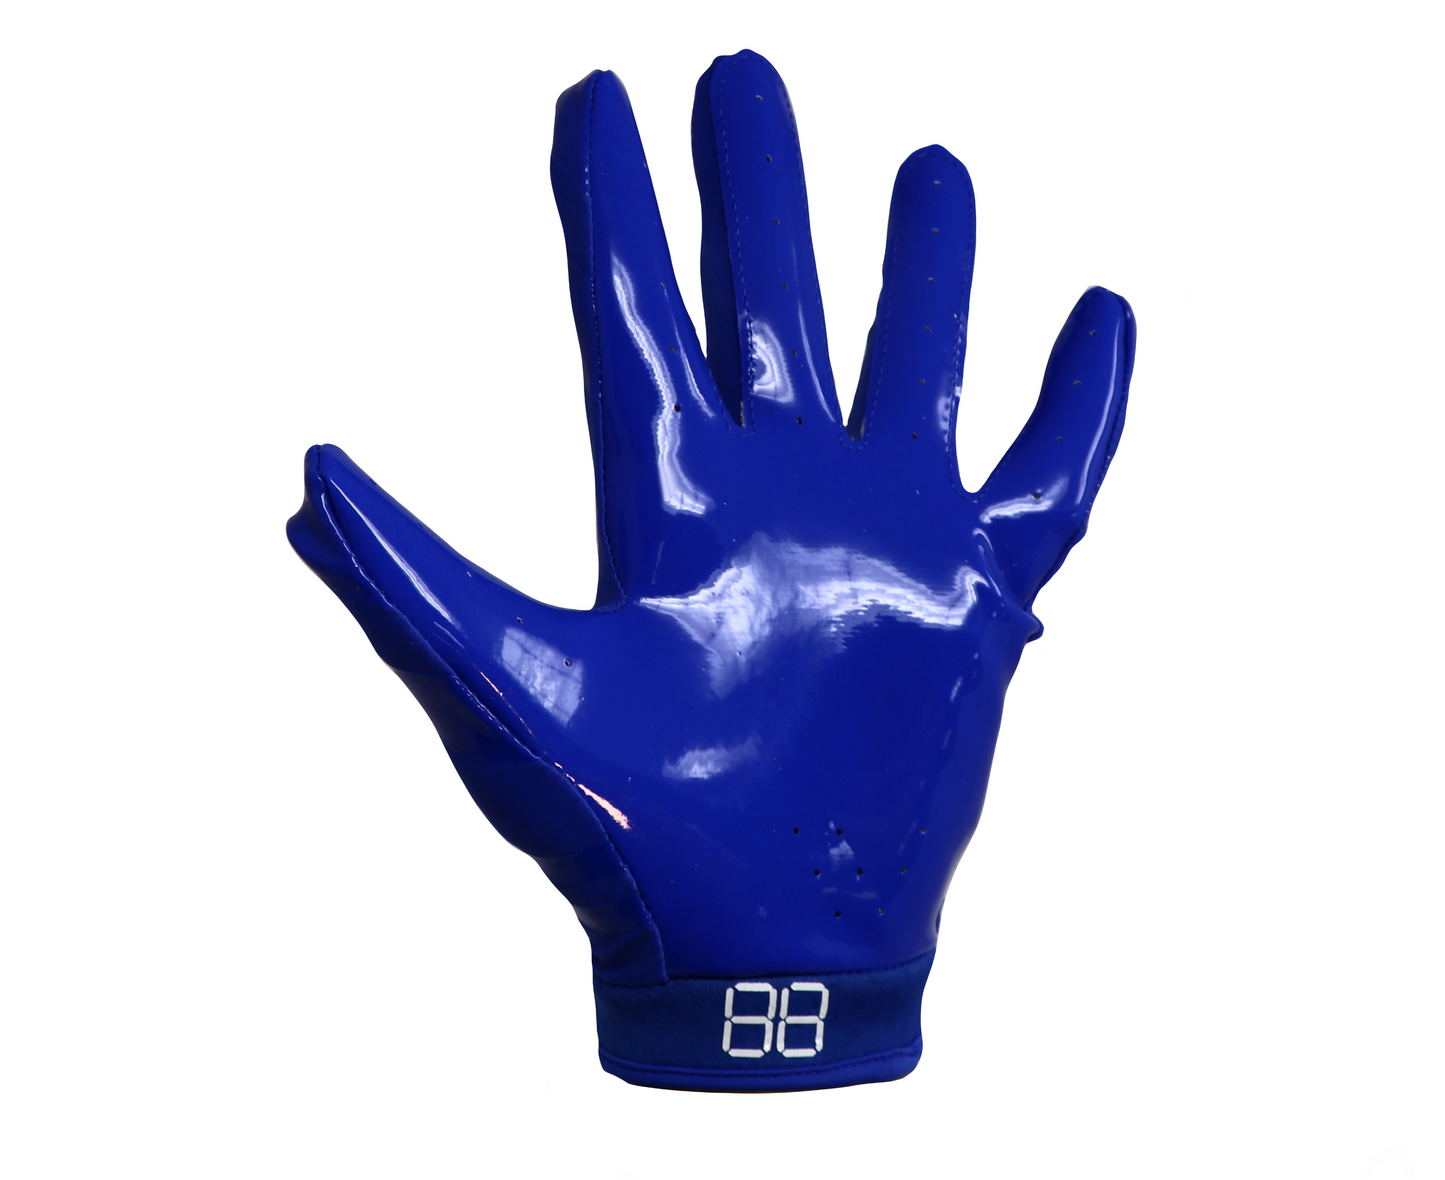 FRG-03 The best receiver football gloves, Blue